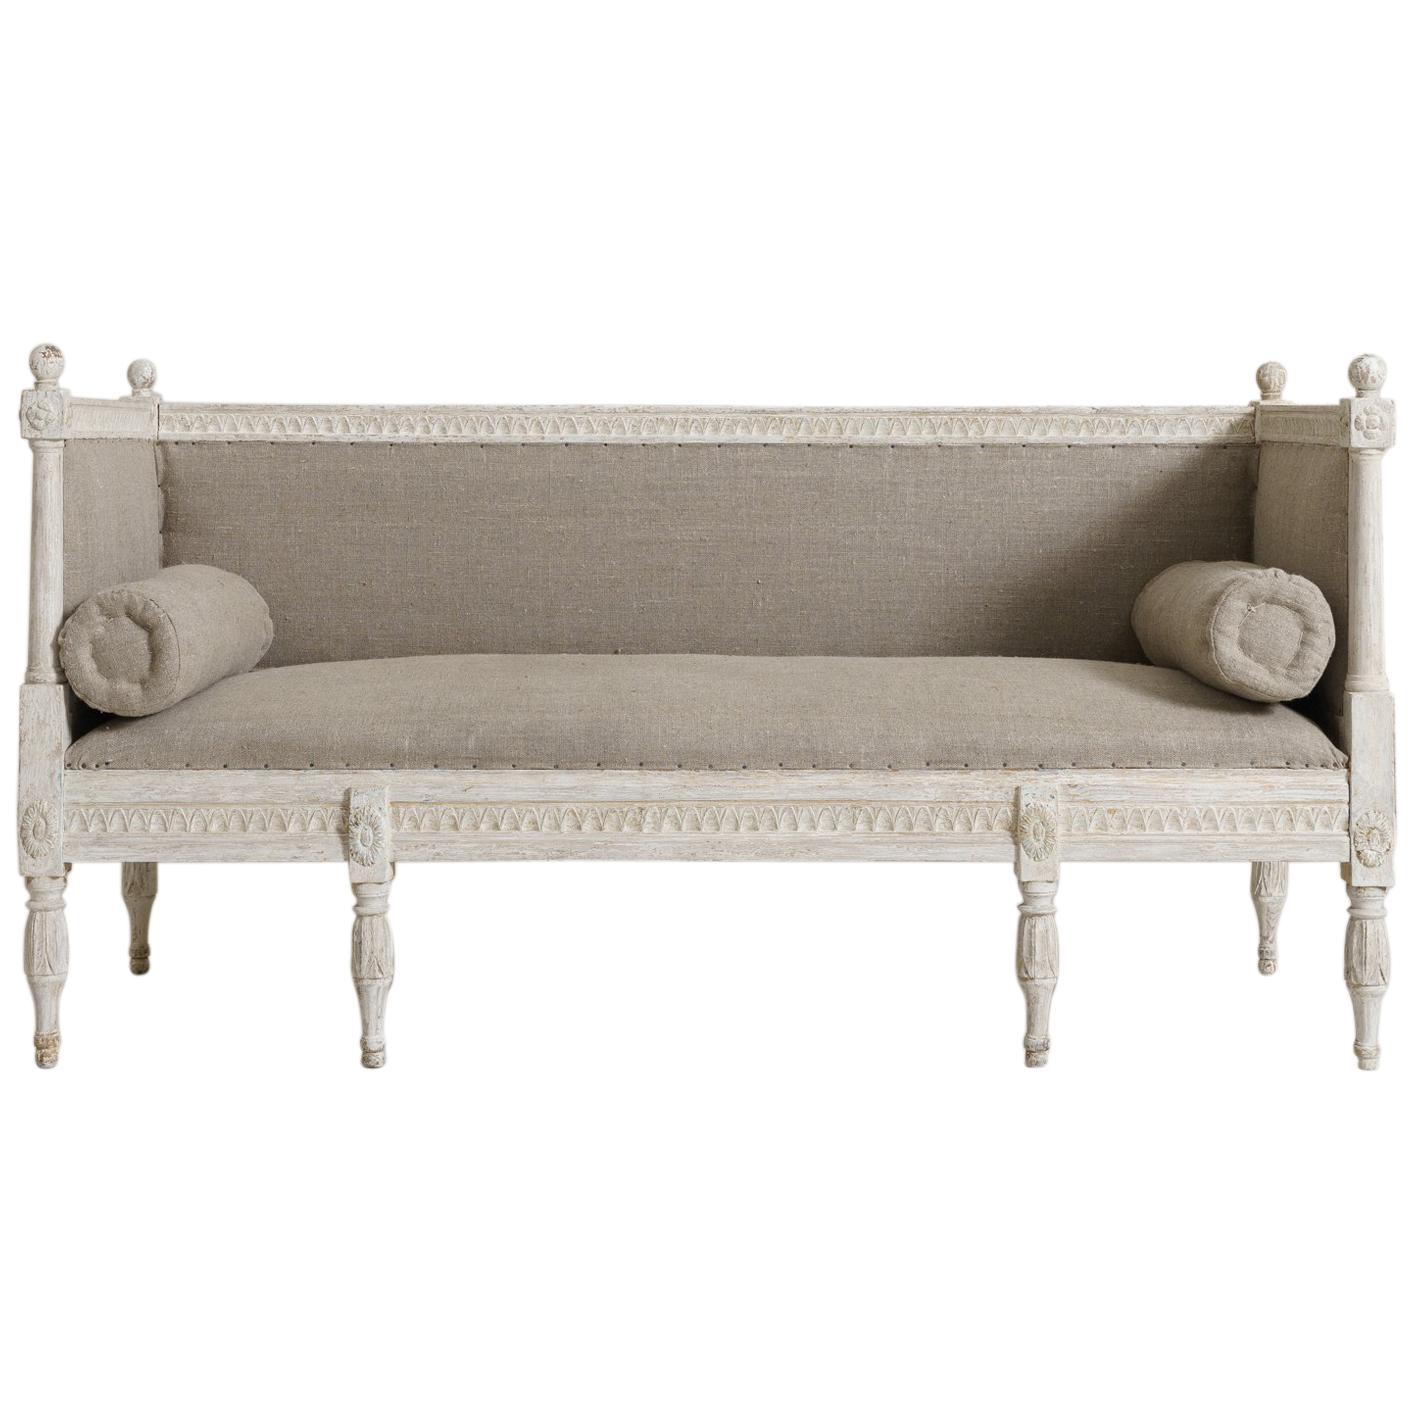 18th Century Swedish Gustavian Period Sofa Bench in Original Paint